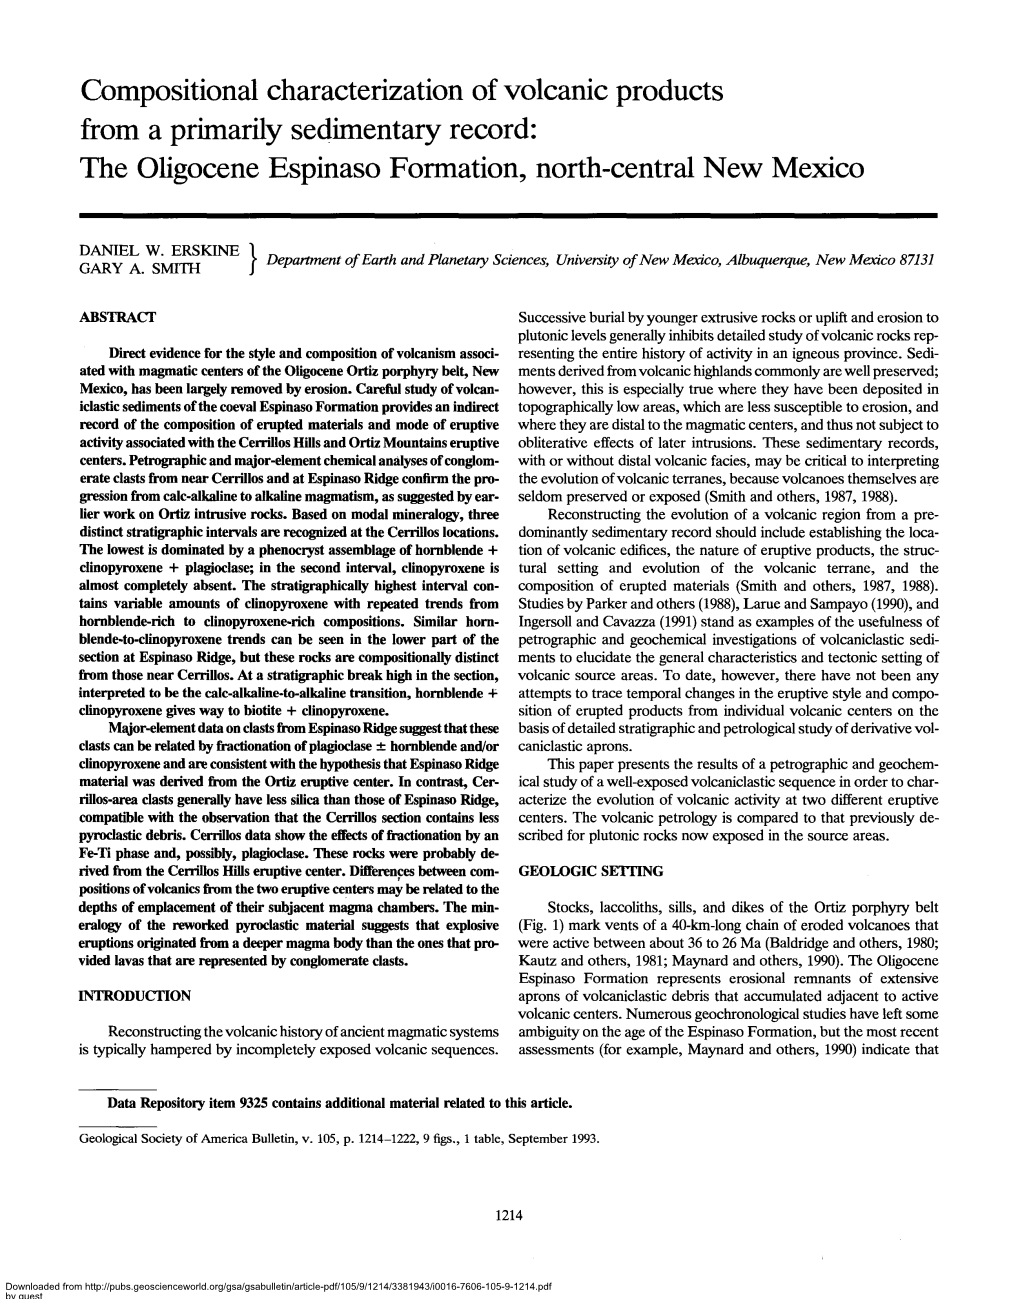 The Oligocene Espinaso Formation, North-Central New Mexico